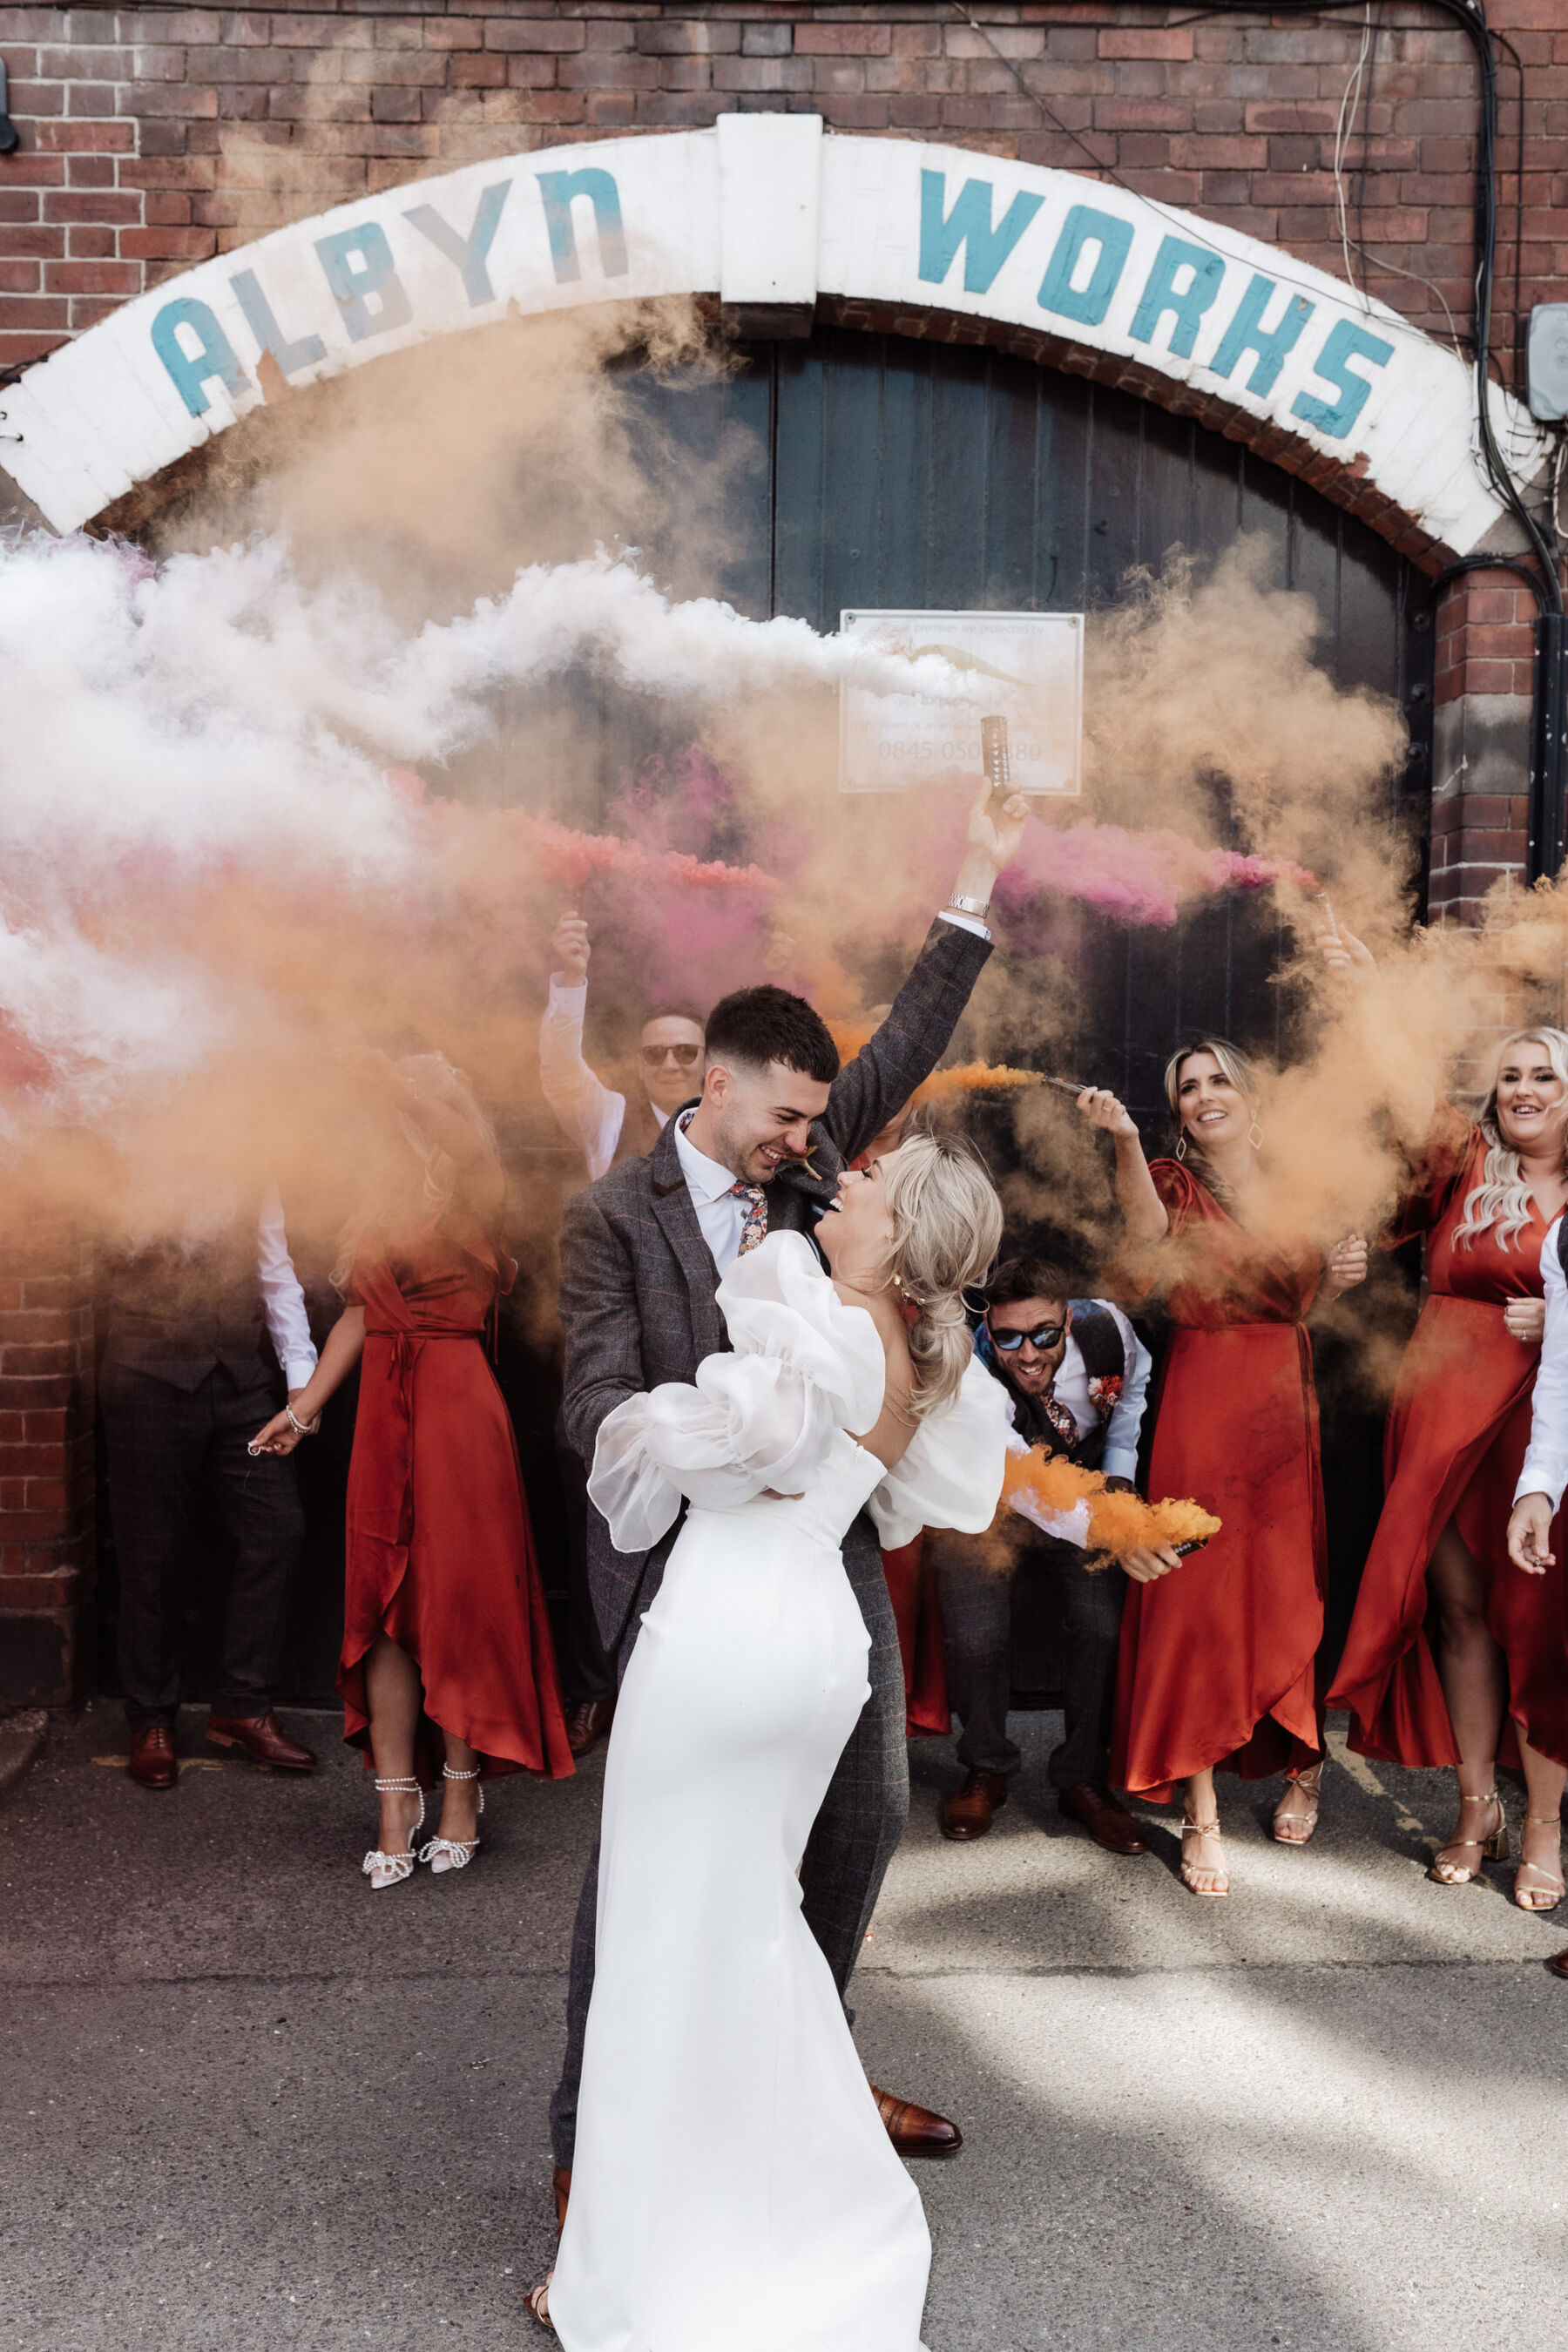 Wedding smoke bombs at Peddler Warehouse wedding venue in Sheffield. Alexandria French Photography.